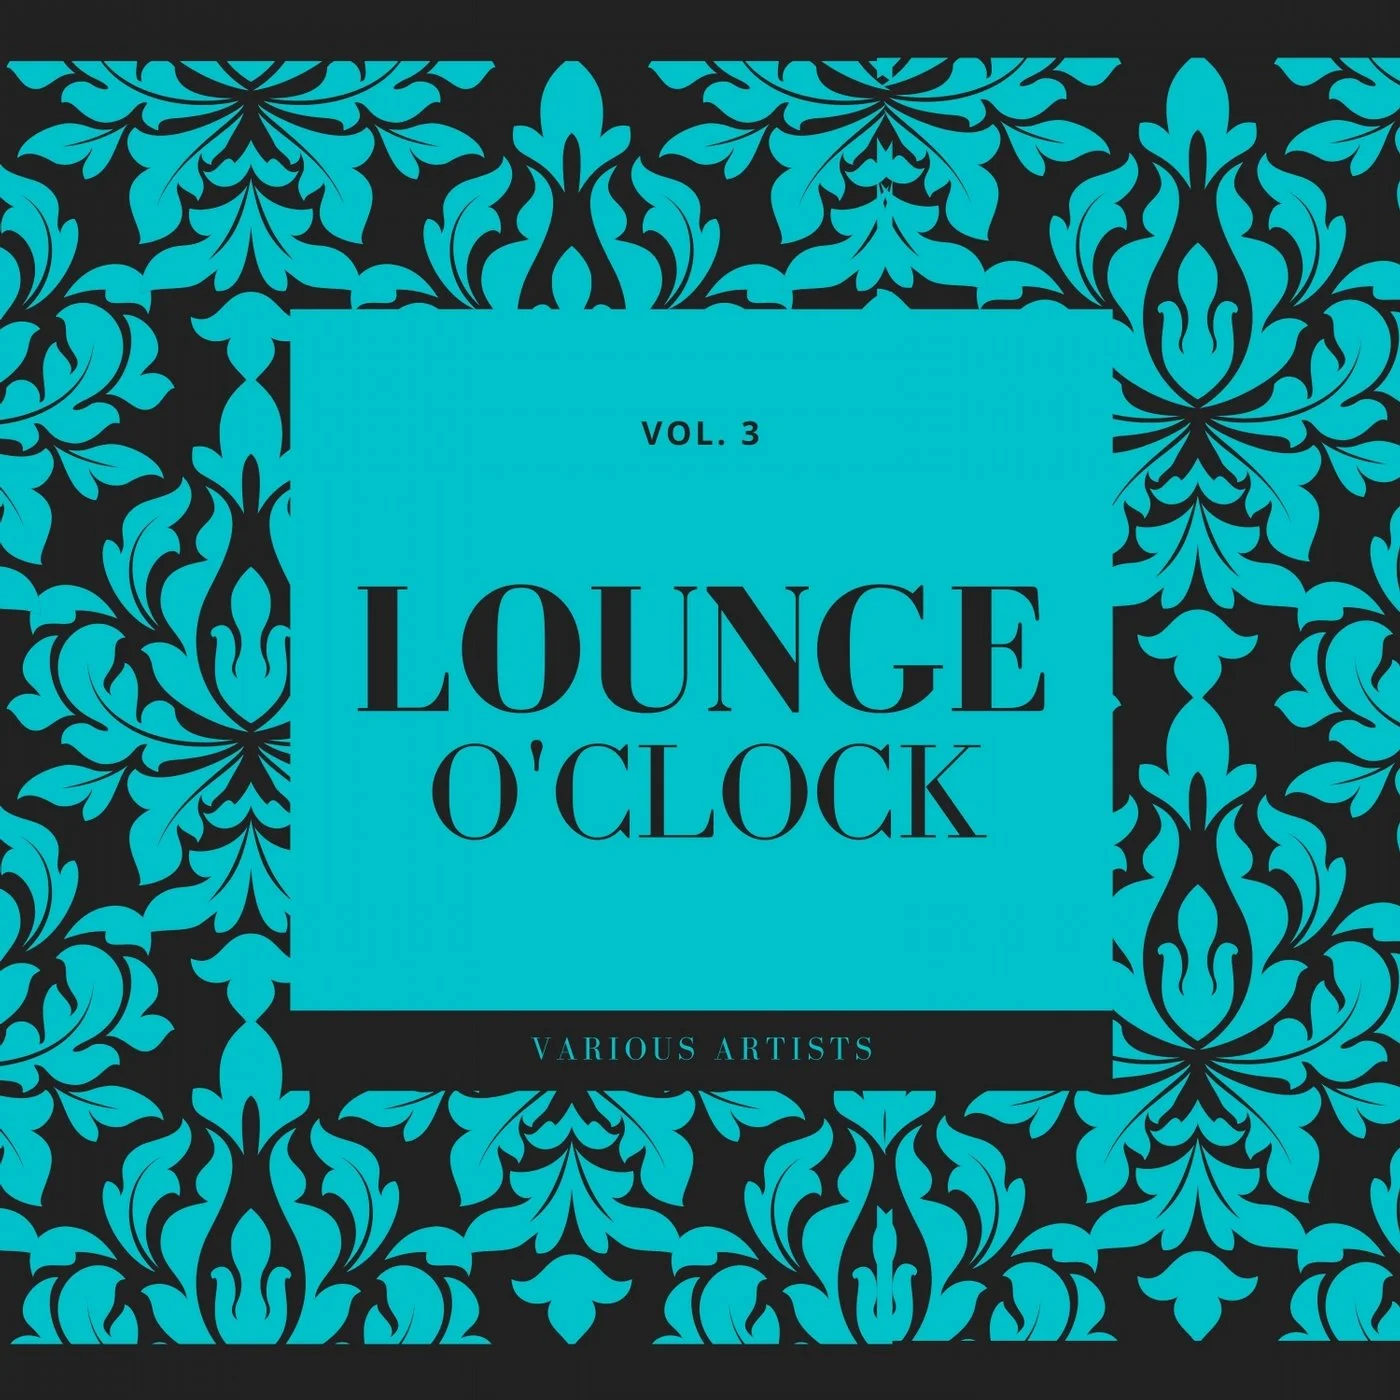 Cover von Compilation "Lounge O'clock, Vol. 3>"